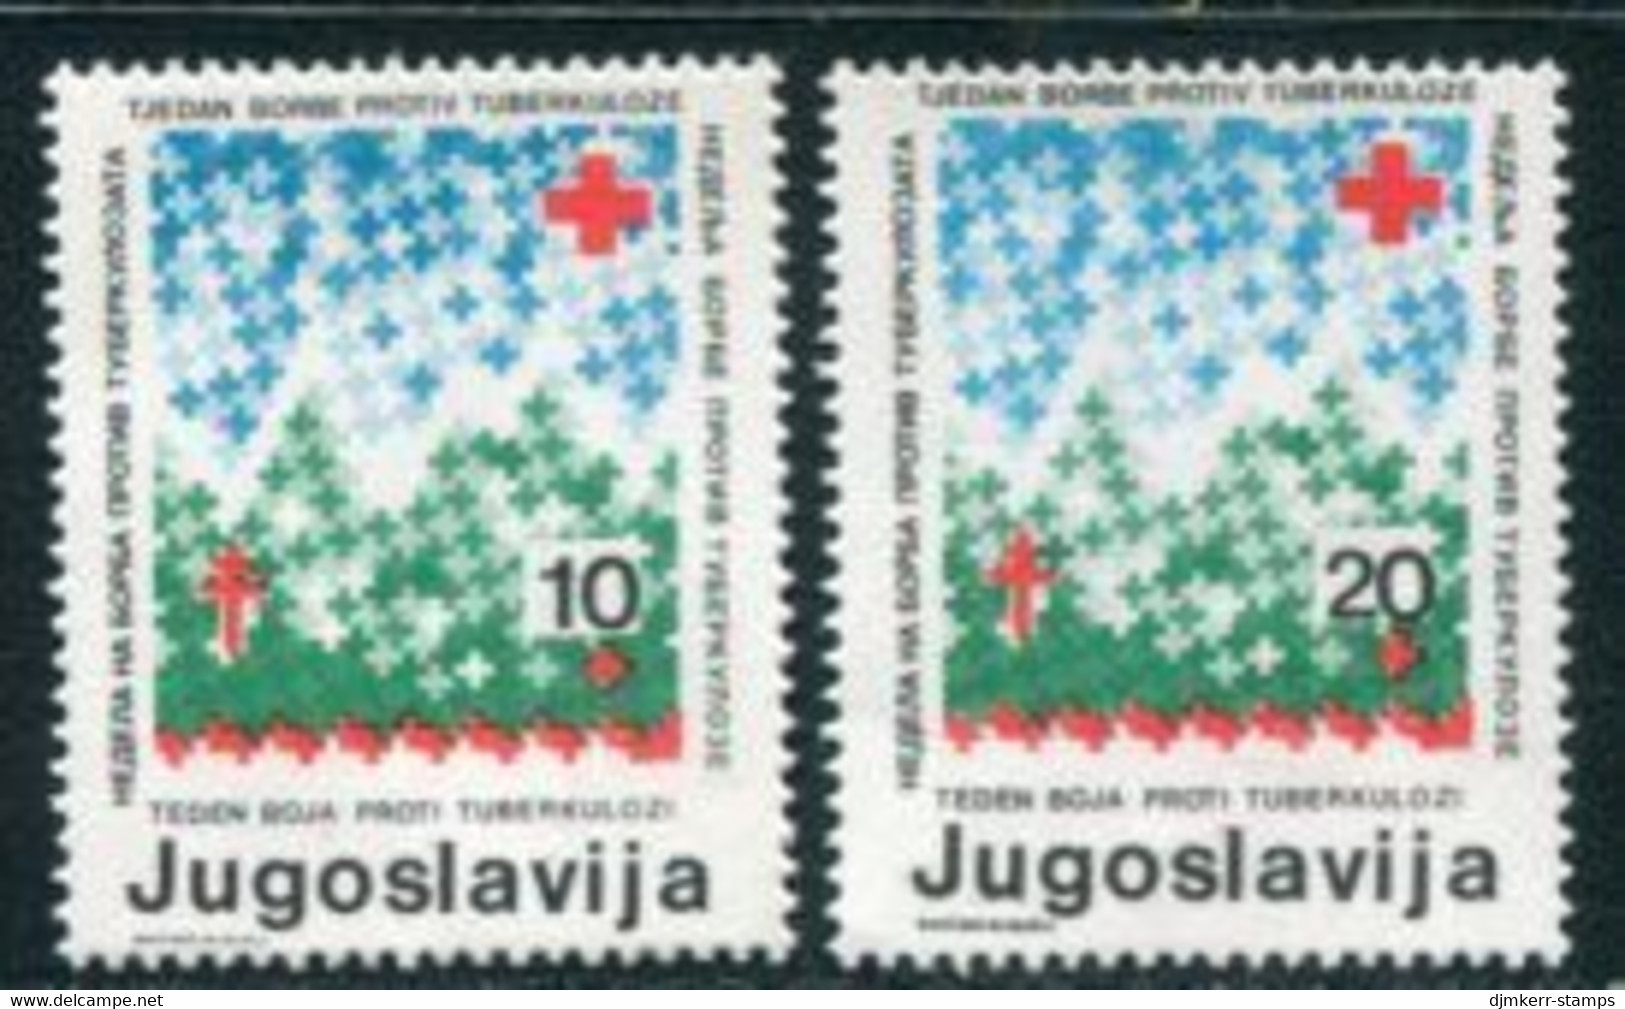 YUGOSLAVIA 1986 Red Cross Anti-Tuberculosis Tax 10, 20 D. Perforated 13¼:13½ MNH / **. Michel ZZM 119C, 122C - Wohlfahrtsmarken